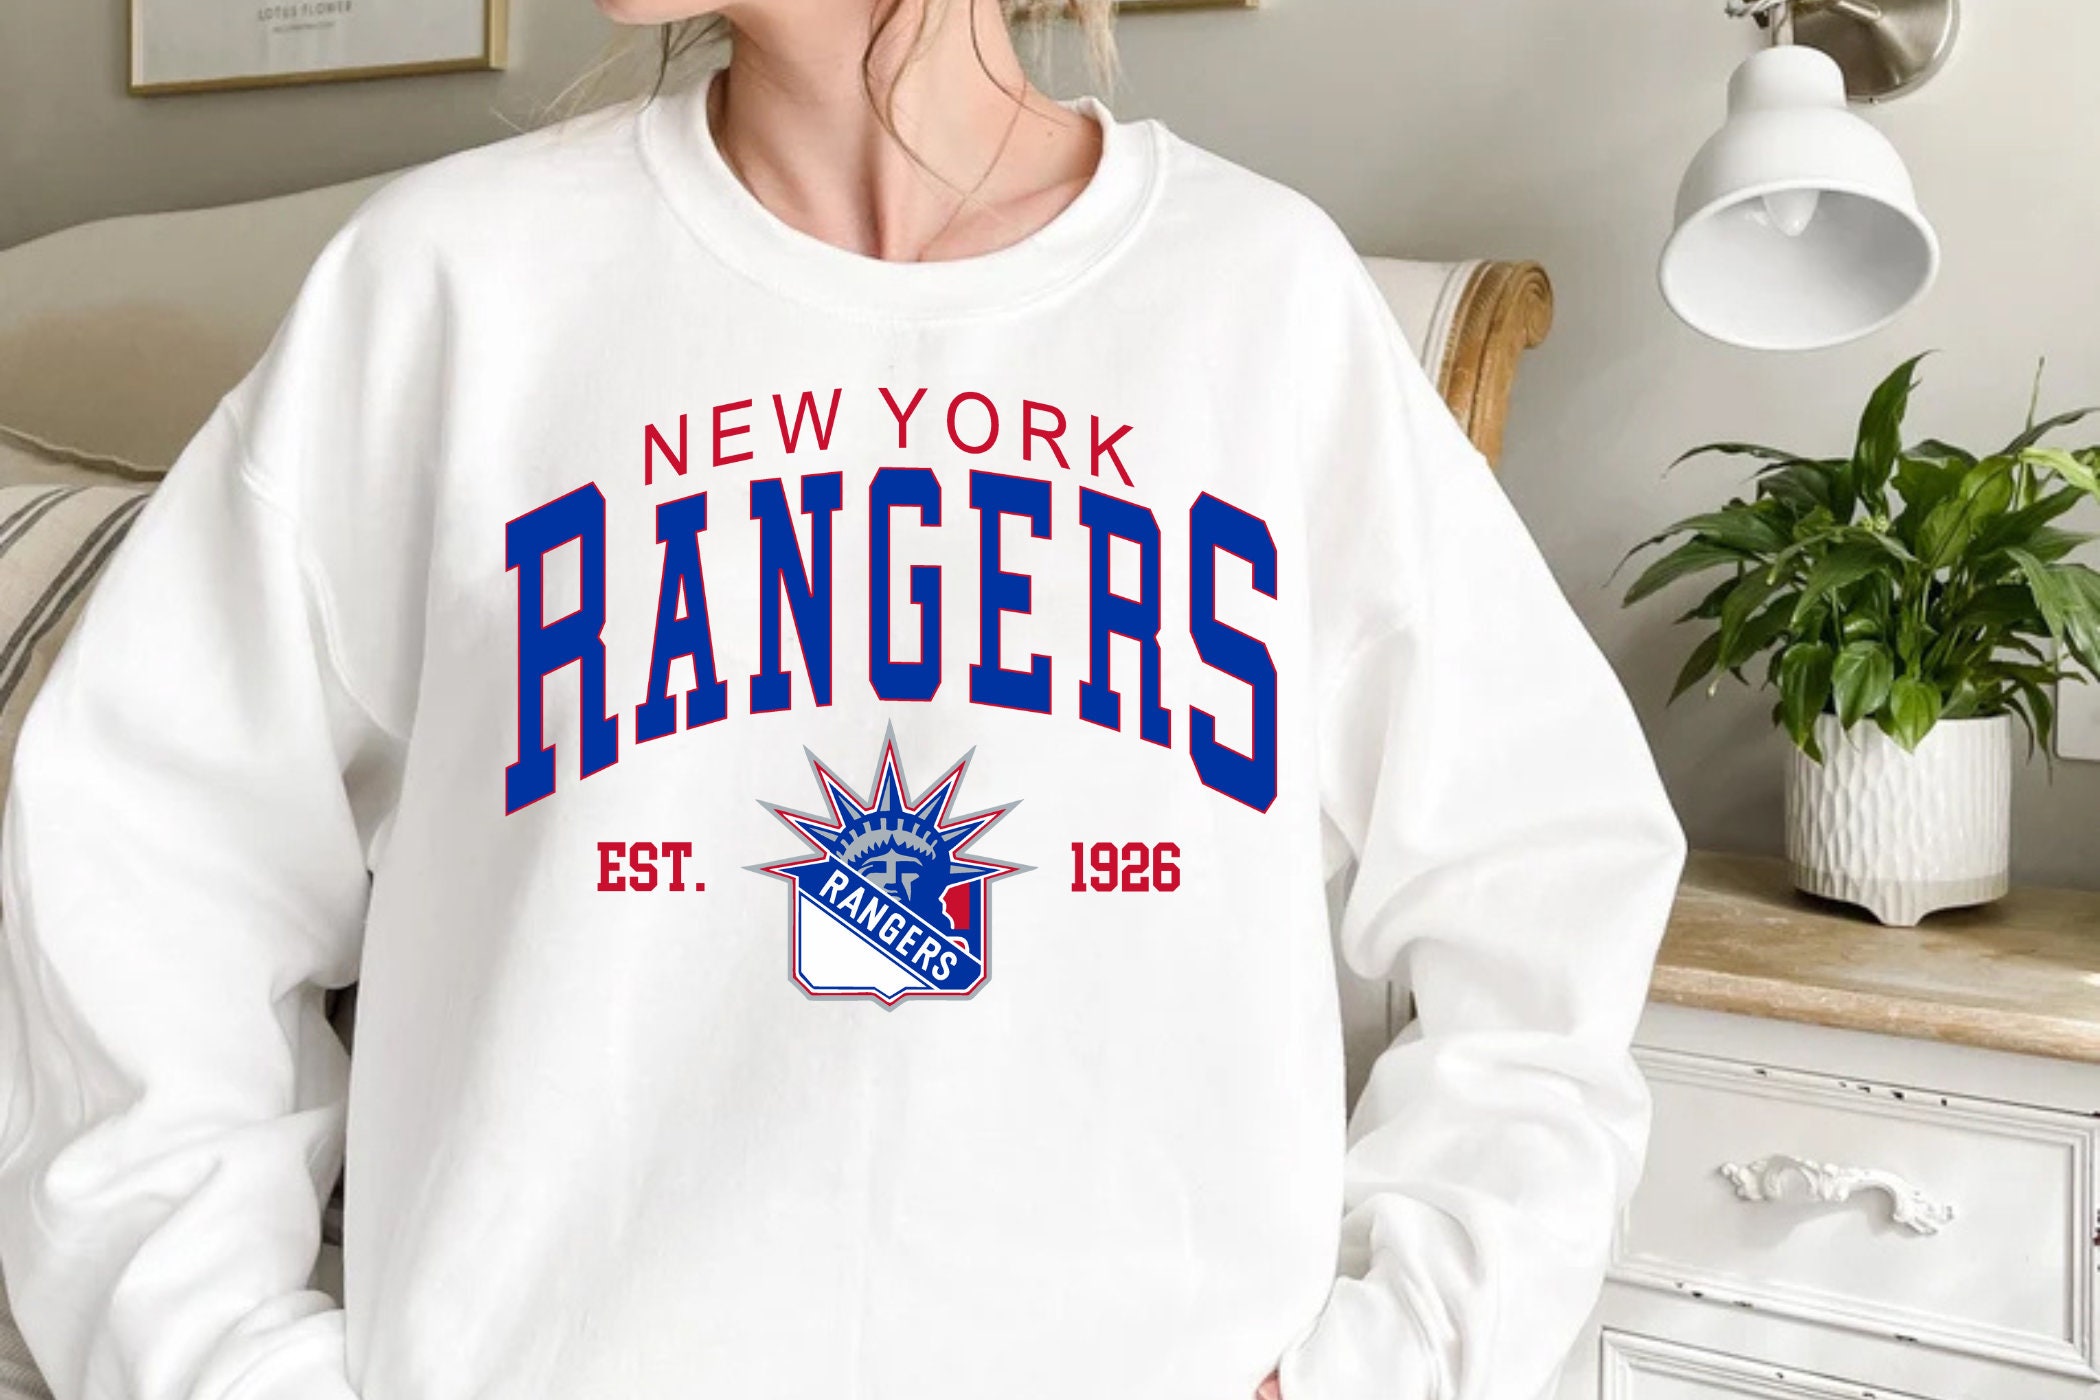 Chris Kreider New York Rangers Jersey Statue of Liberty – Classic Authentics